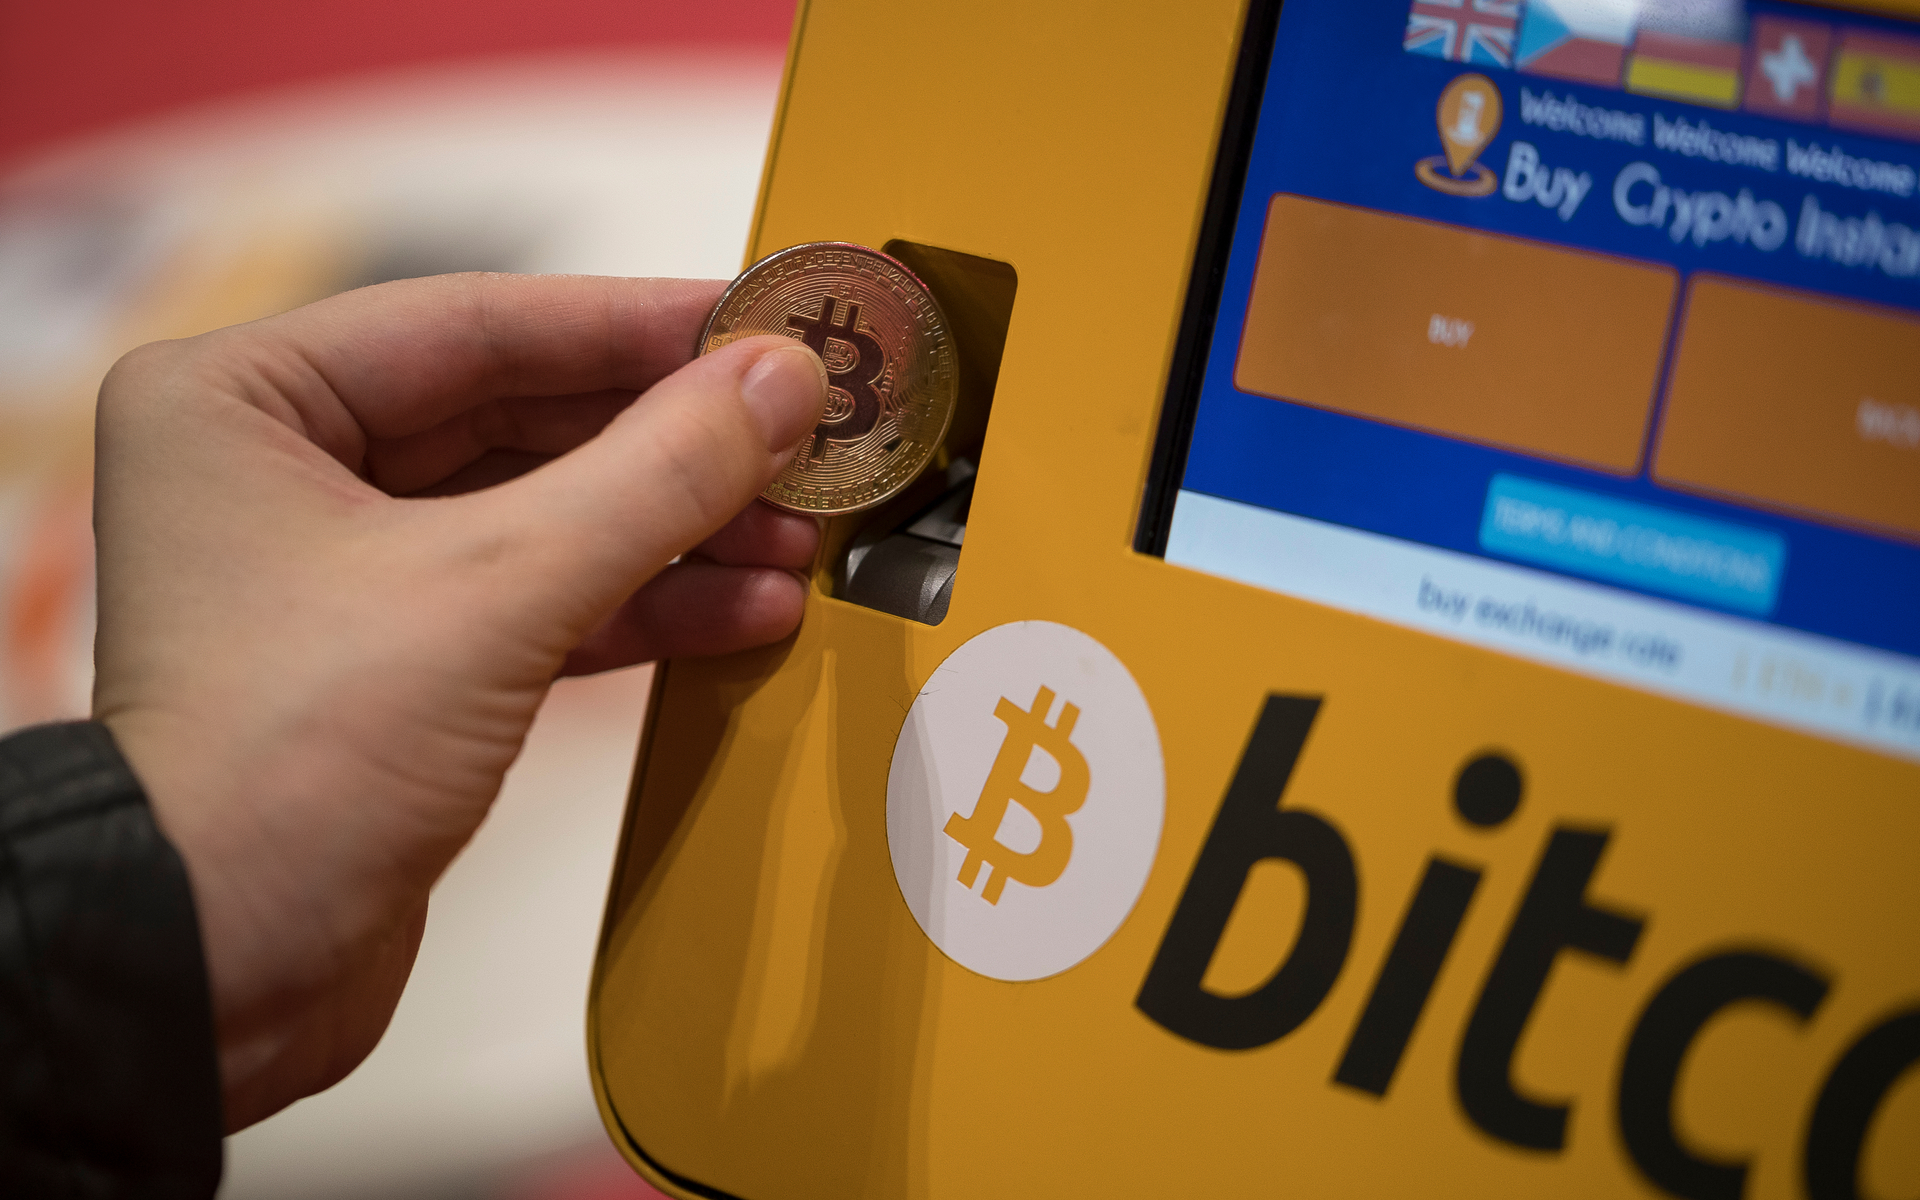 Bitcoin ATM limit